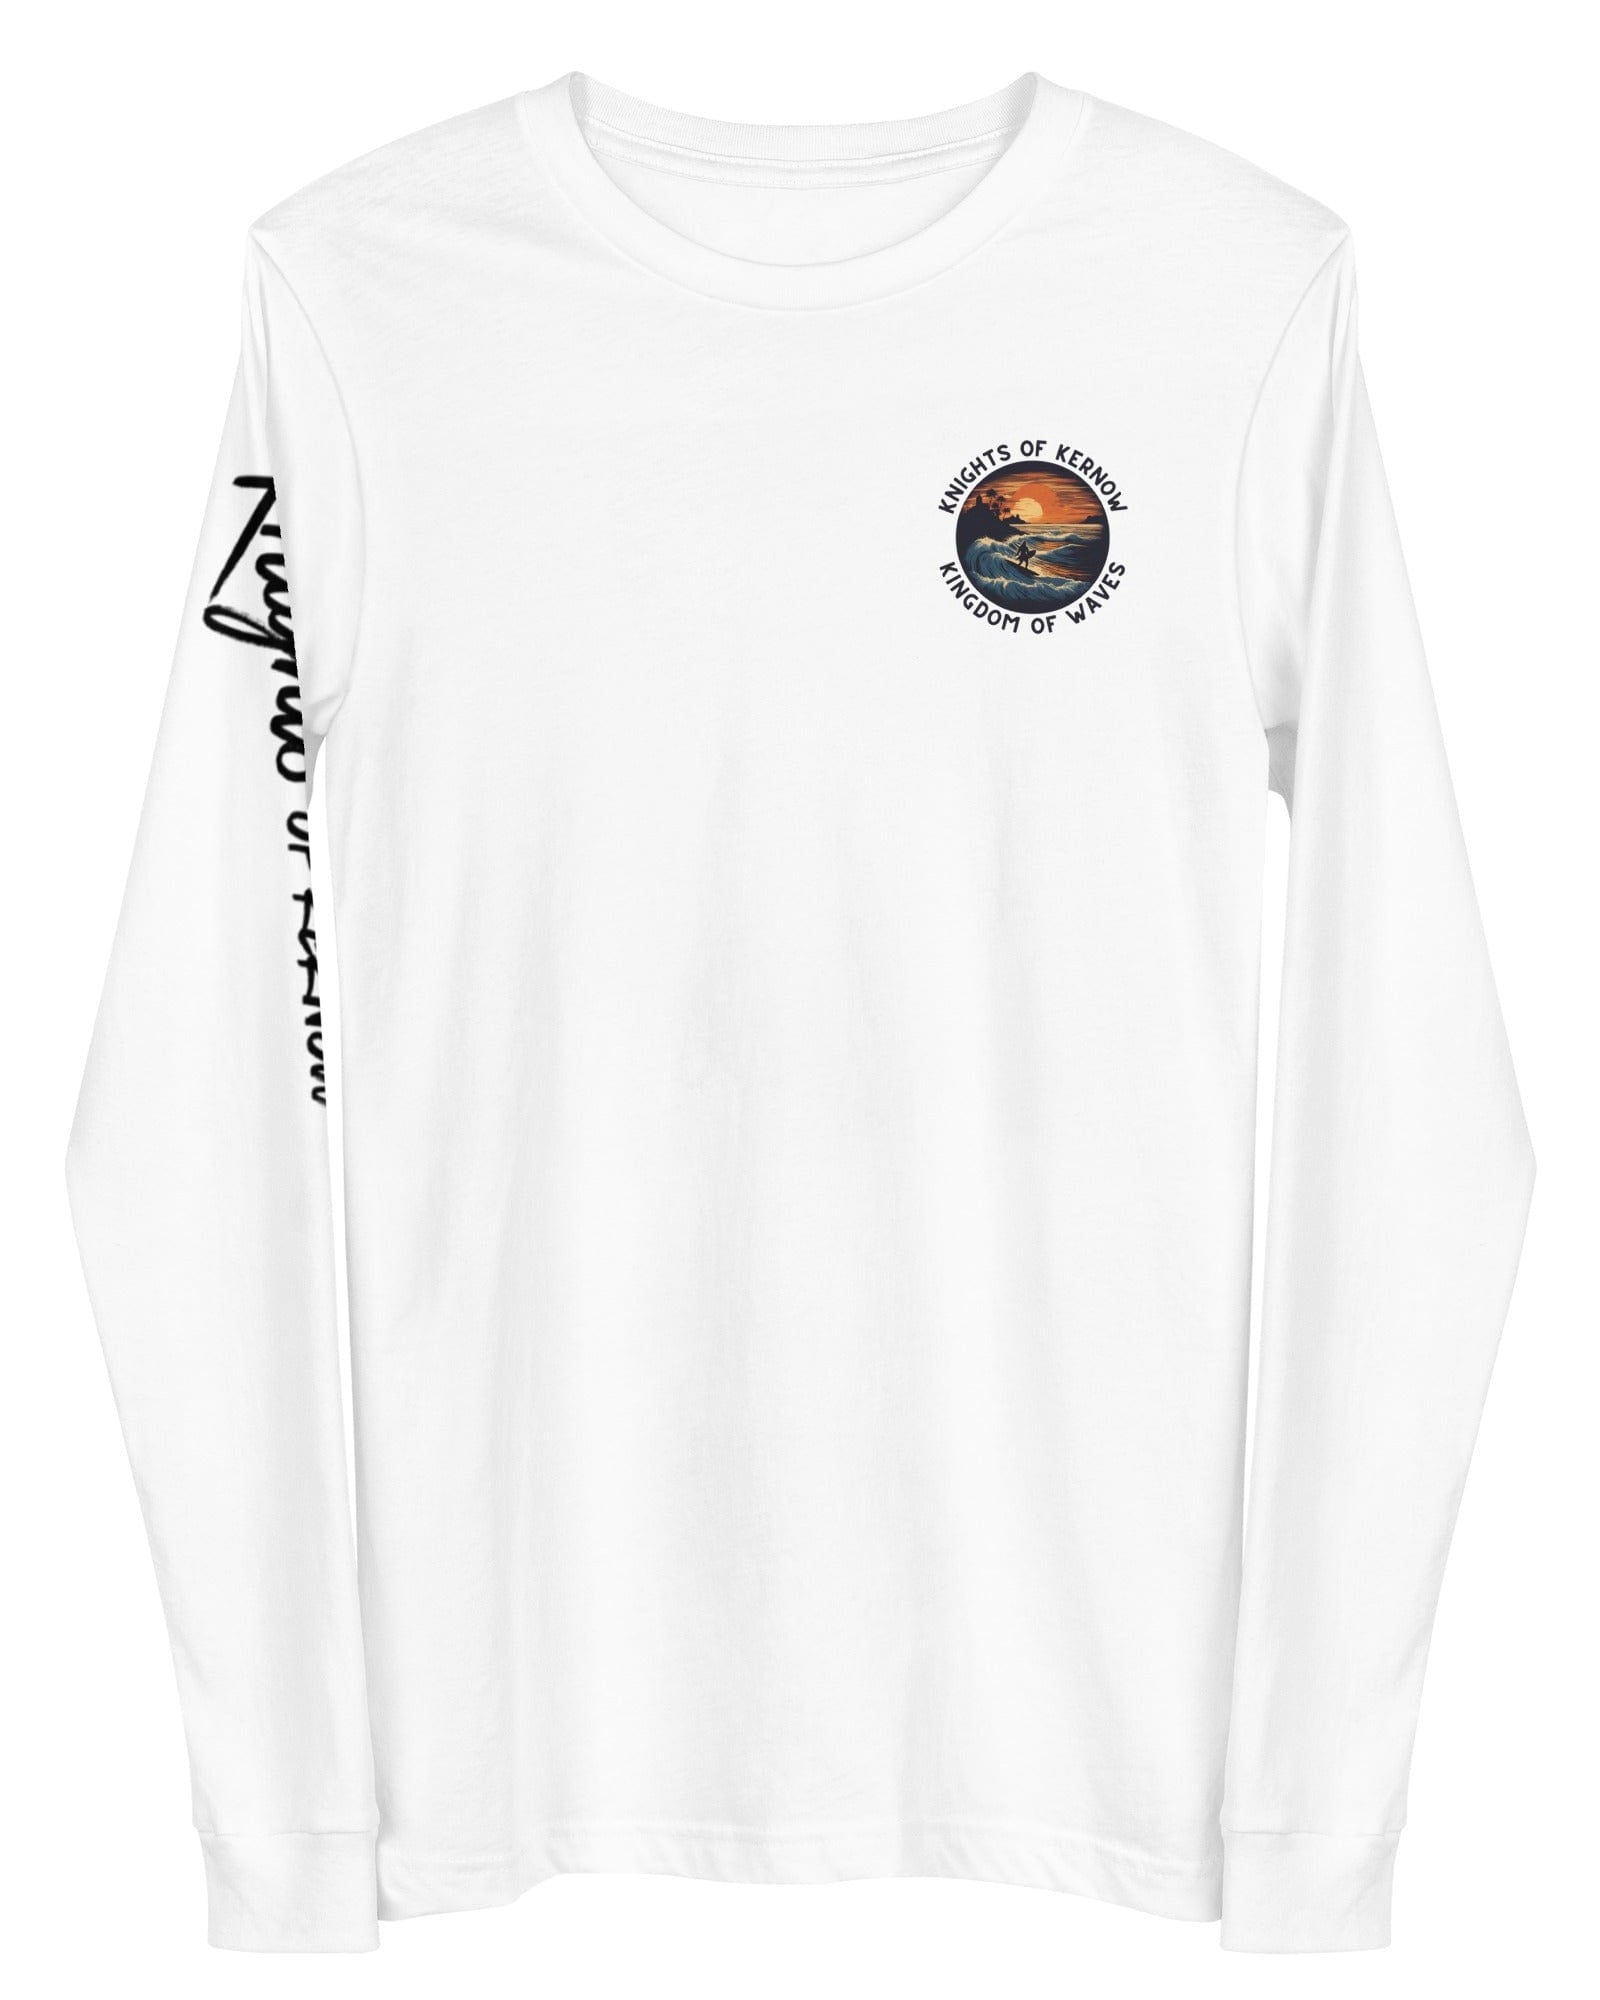 Knights of Kernow Kingdom of Waves Long-Sleeve Surfer Shirt XS long sleeve shirts Jolly & Goode